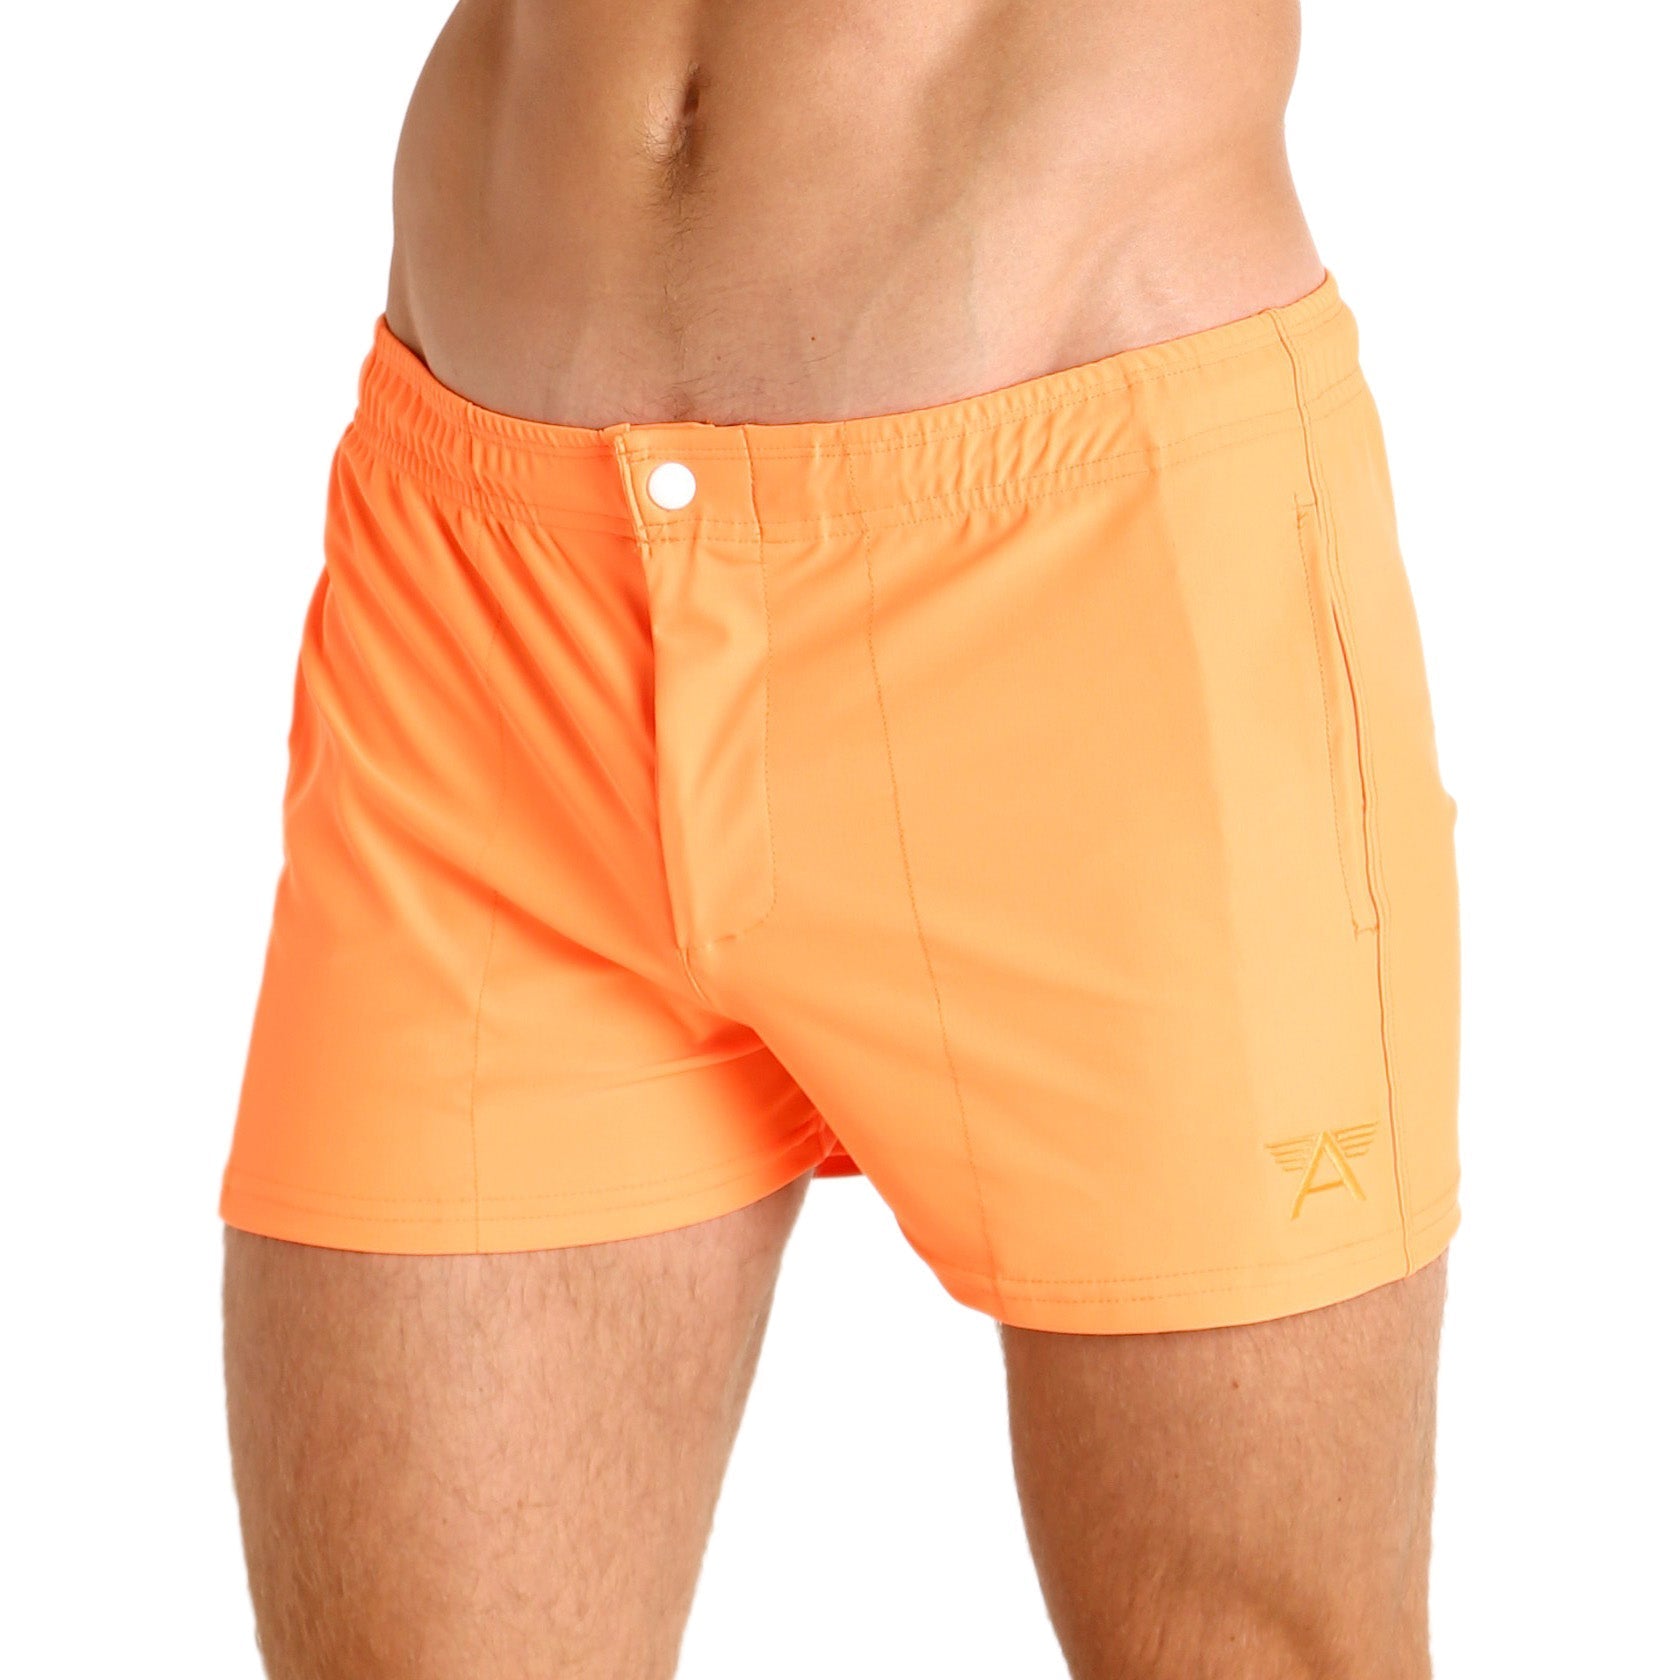 Mod Swim Shorts - Solid Neon Orange - Shorter Length - Destination PSP